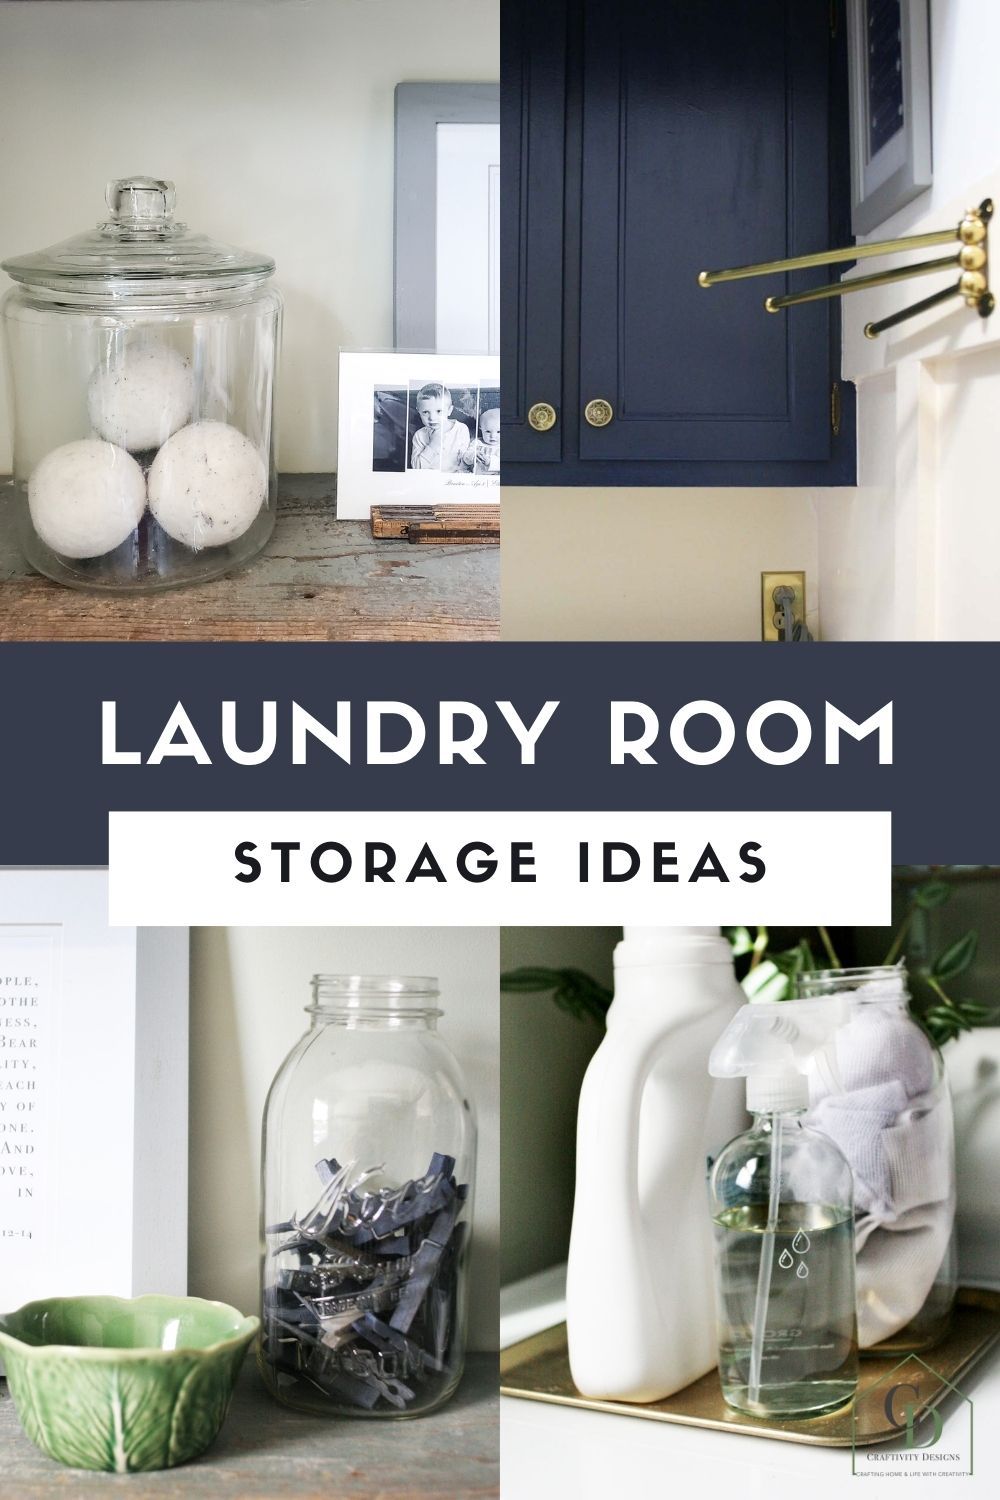 https://craftivitydesigns.com/wp-content/uploads/2022/04/small-laundry-room-ideas-1.jpg